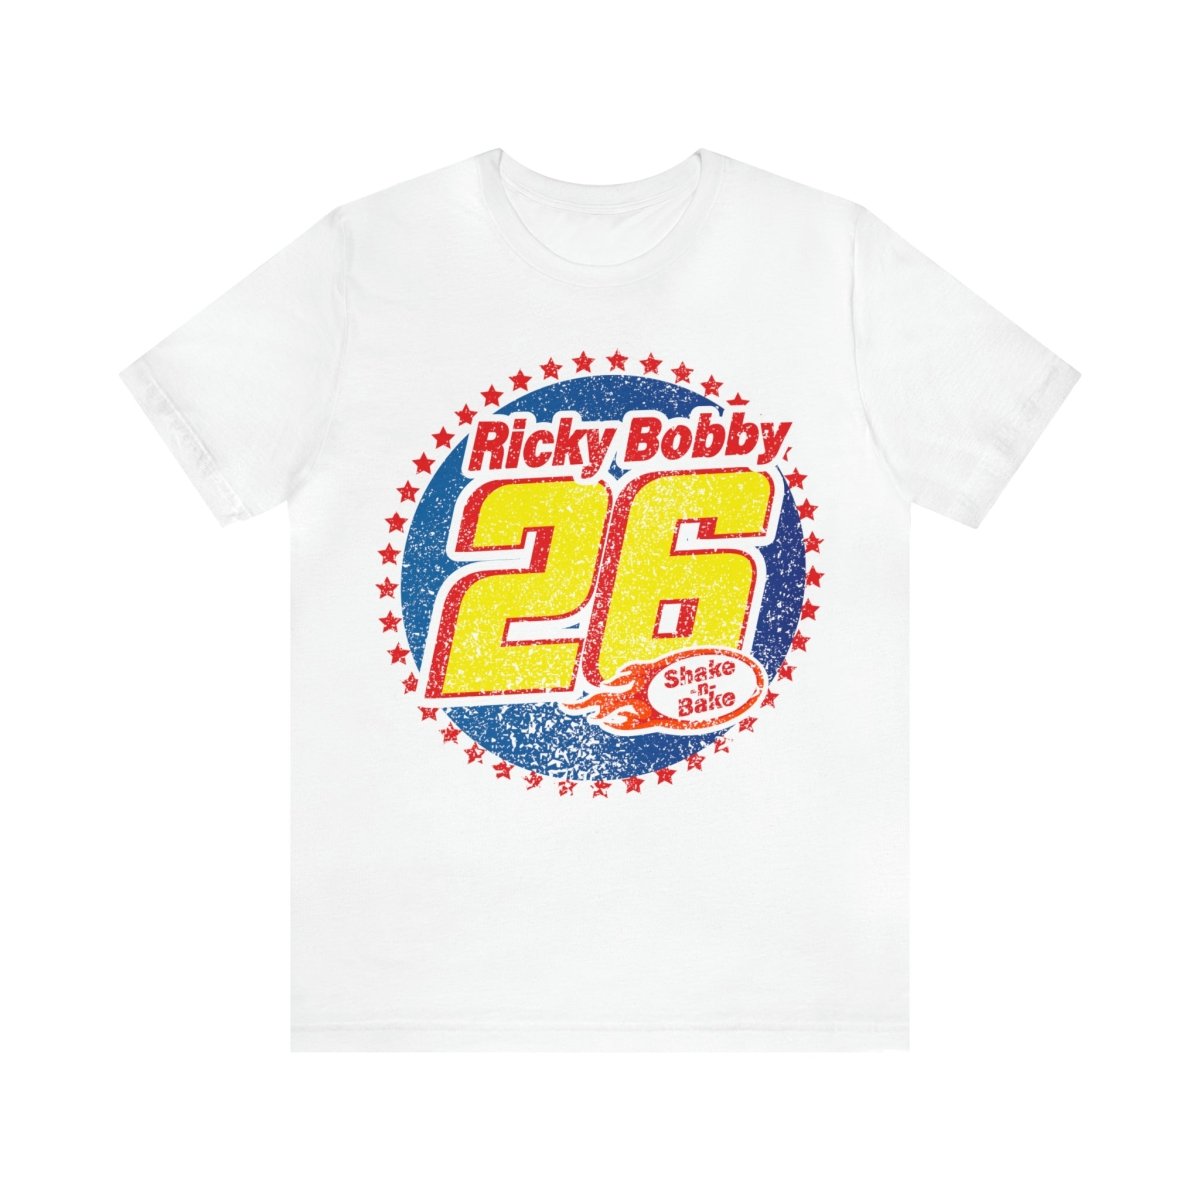 Ricky Bobby #26 Premium T-Shirt, Champion Race Car Driver, Go Fast